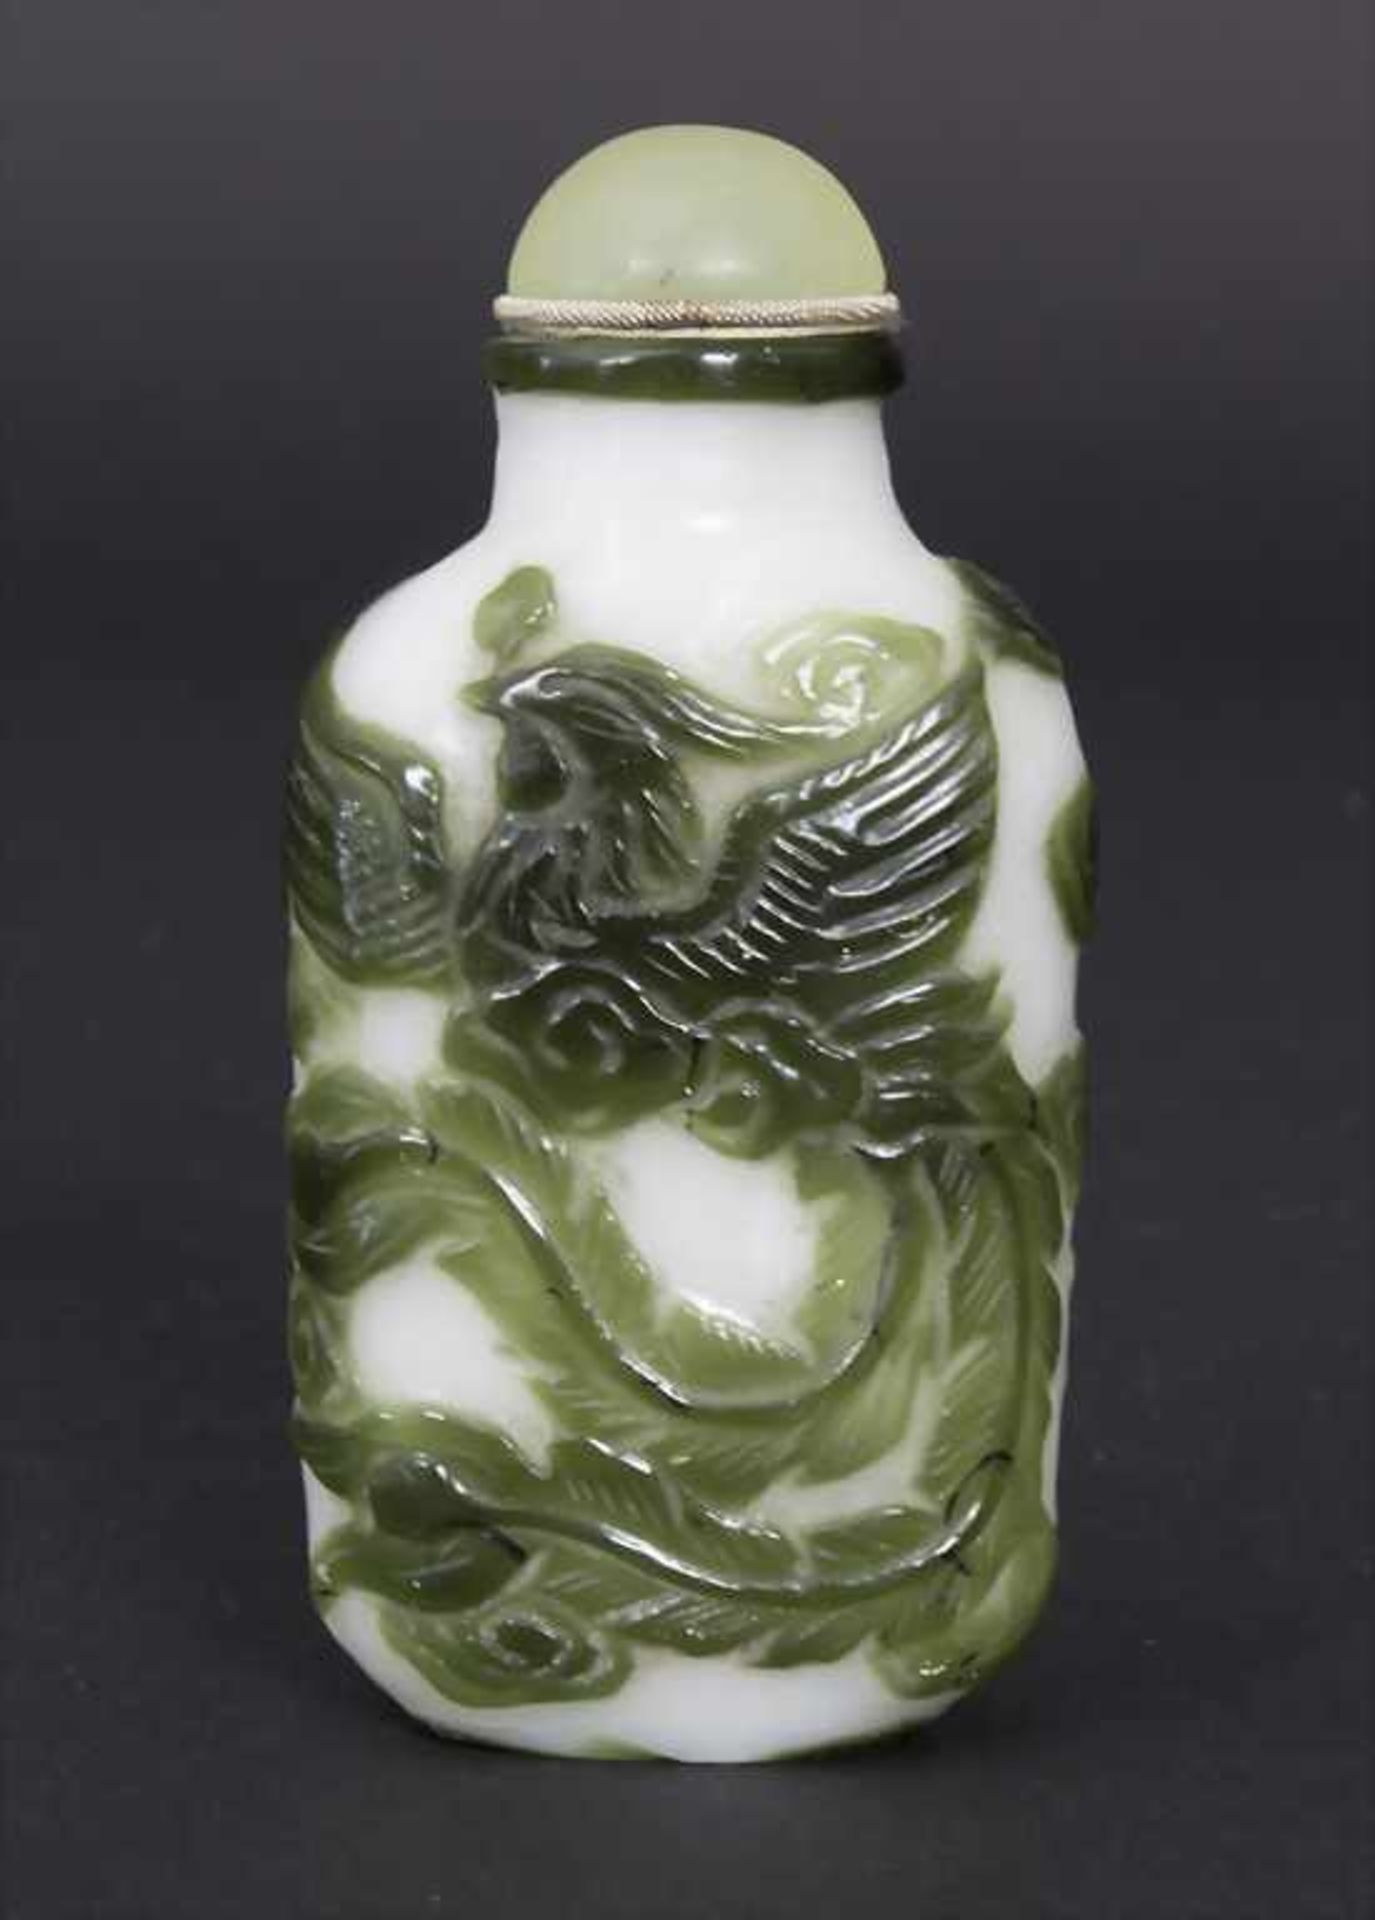 Snuff Bottle, China, um 1900Material: Milchglas überfangen, Kristallstöpsel,Dekor: Phönixe und